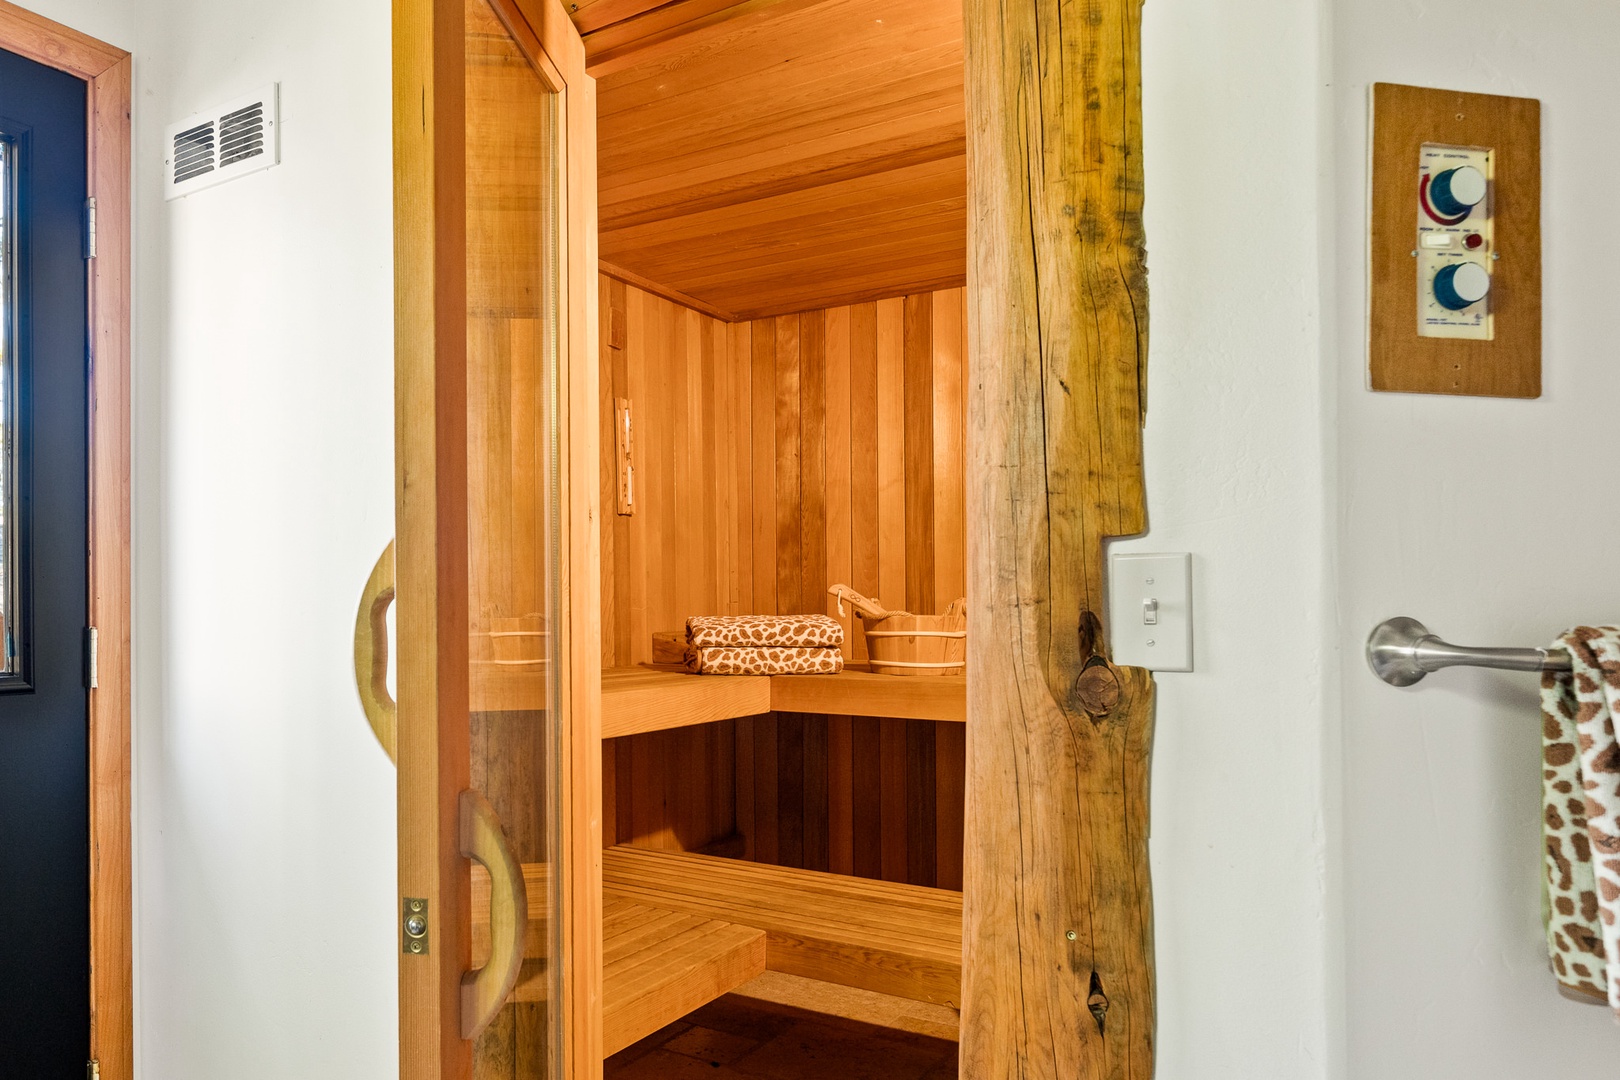 Sauna located inside the home